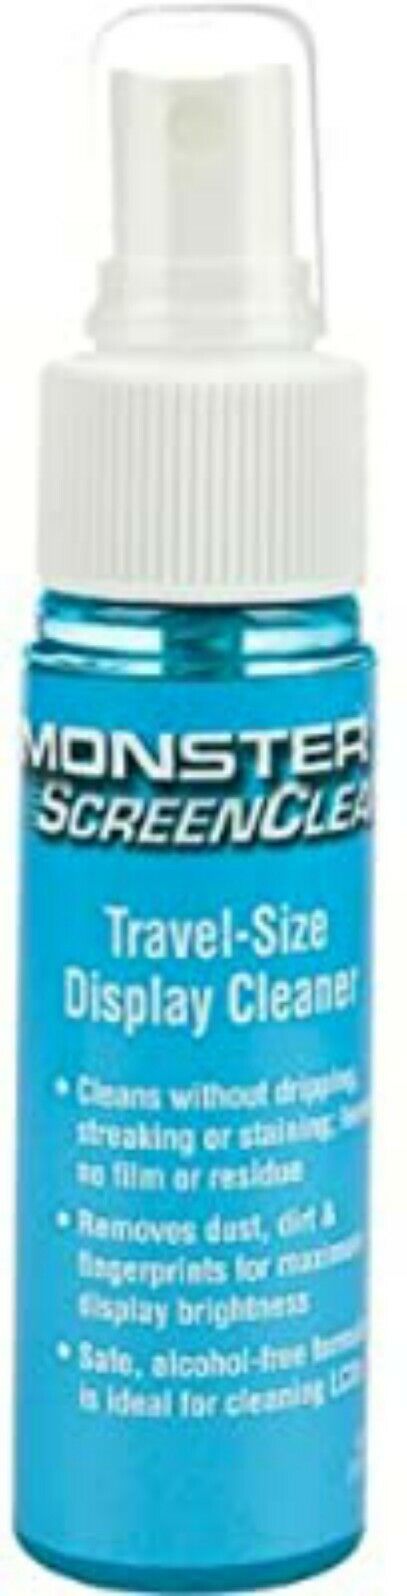 Monster Essentials ScreenClean Digital Display Cleaning Kit